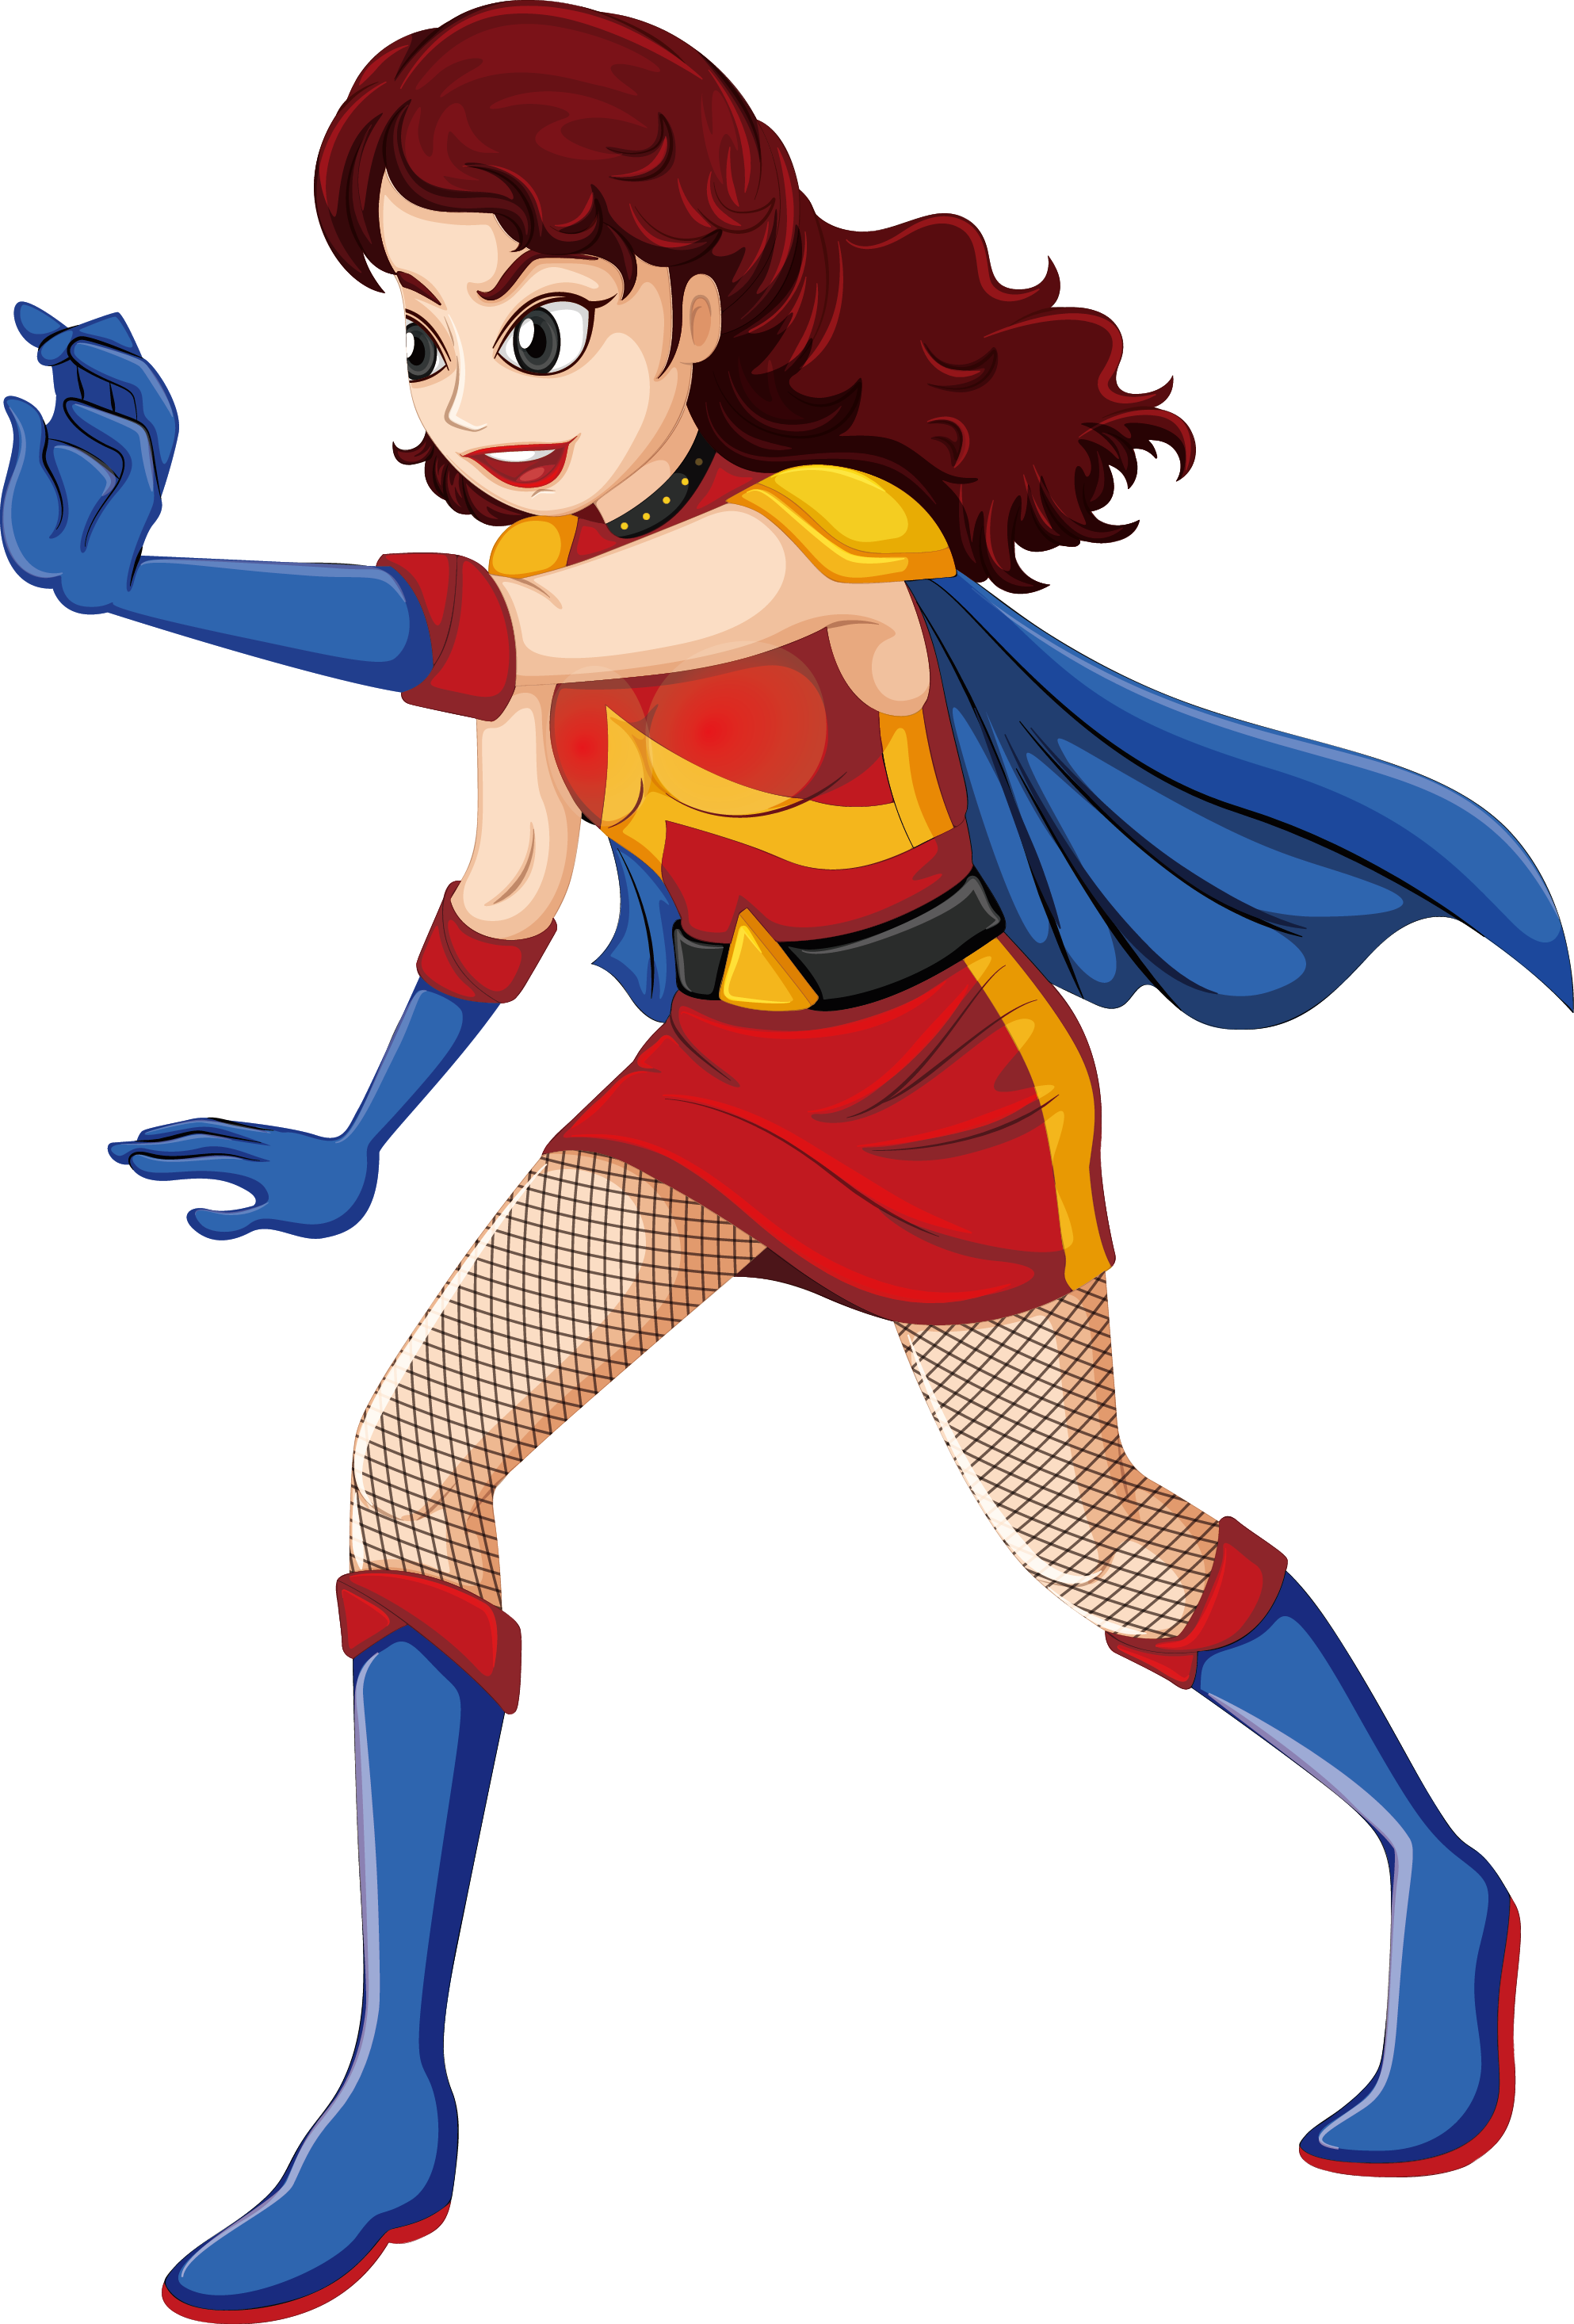 Superhero Royalty-free Photography Illustration - Woman Superhero Custom Lunch Box (1986x2932)